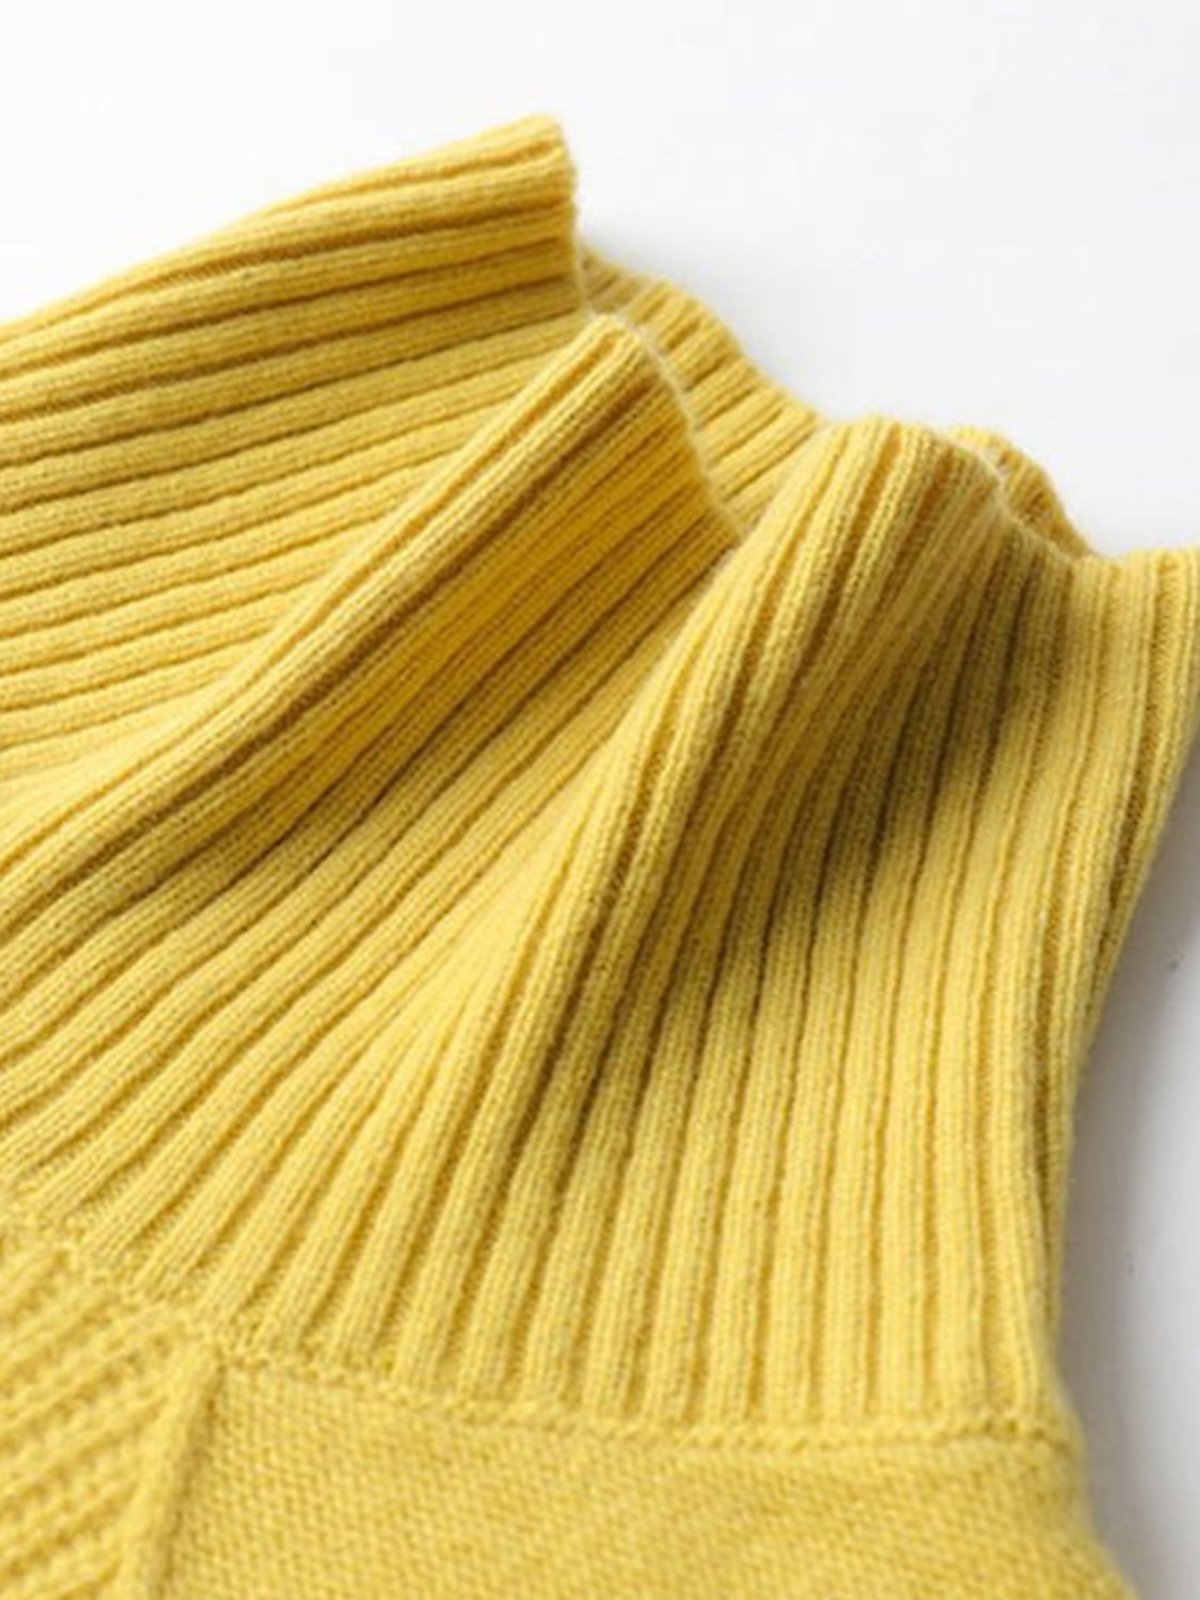 Wool/Knitting Turtleneck Casual Sweater